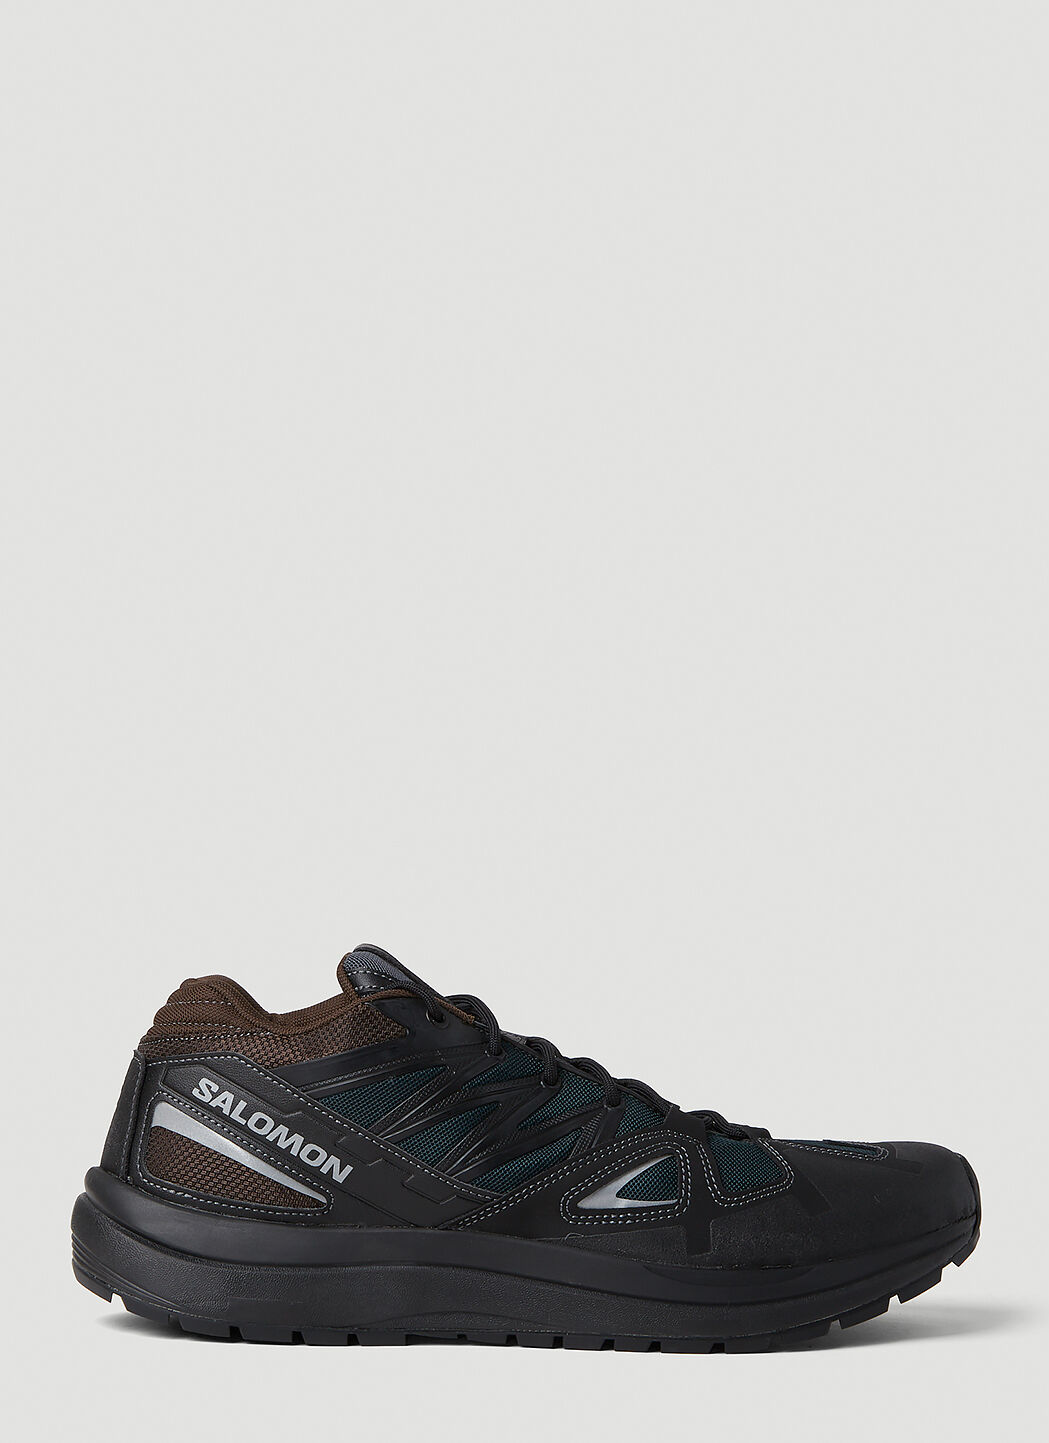 And Wander Men's x Salomon Odyssey Sneakers in Black | LN-CC®